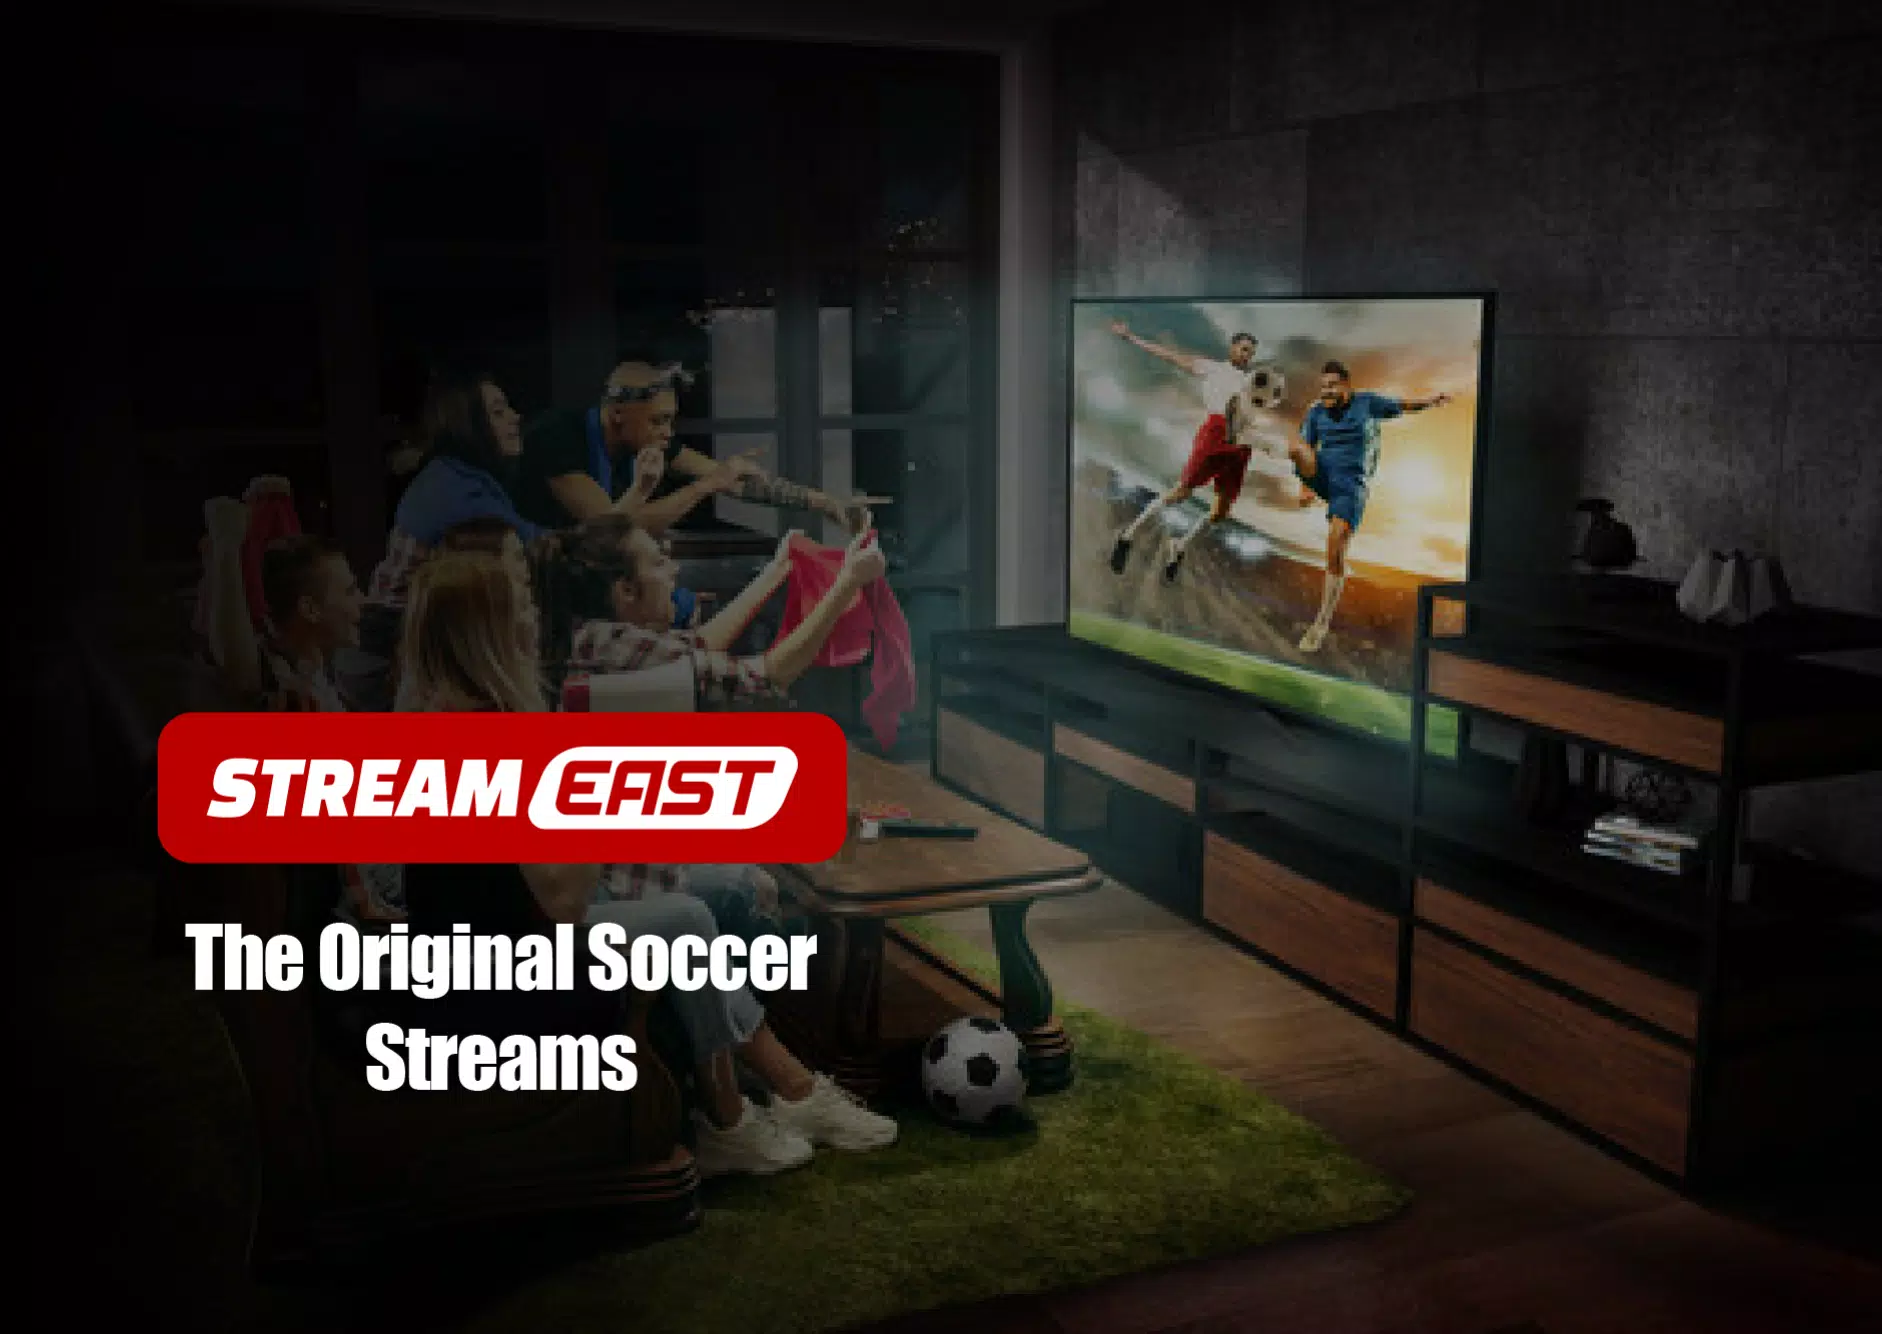 Stream East (com.stream.streameast.matches.sports.strea) 2.2.0 APK Download  - Android APK - APKsHub